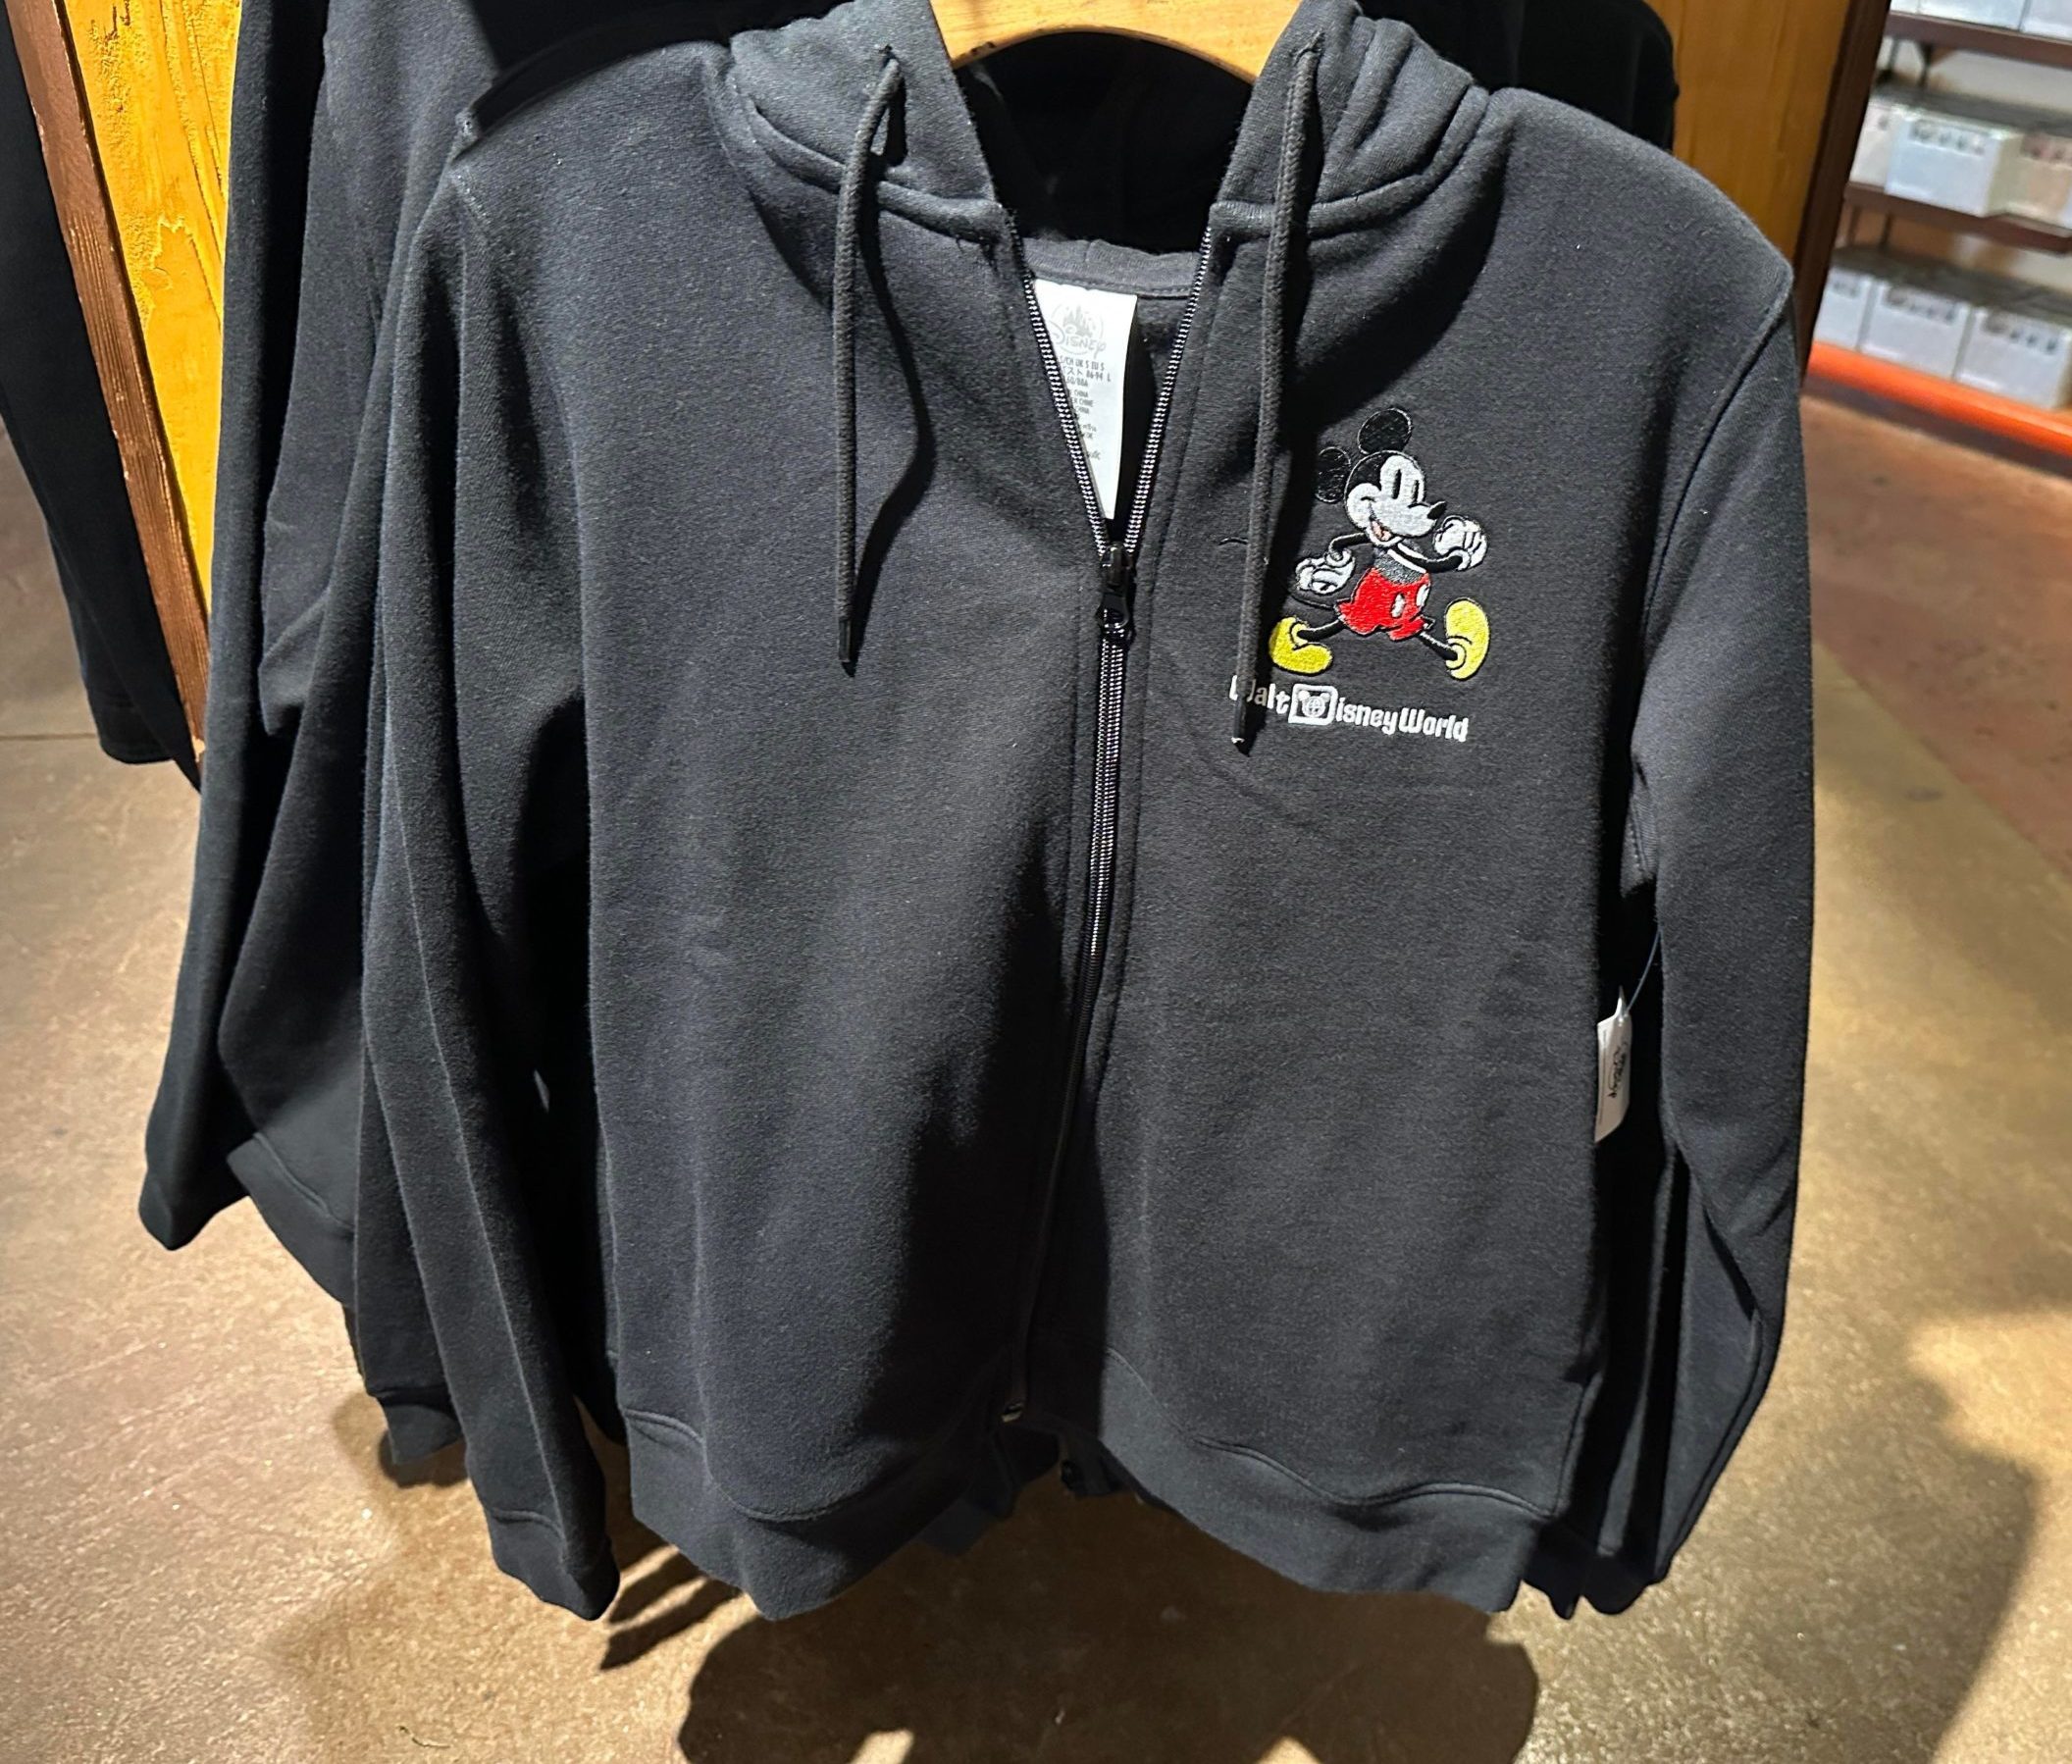 Classic Walt Disney World Sweatshirts Come to Discovery Trading Company ...